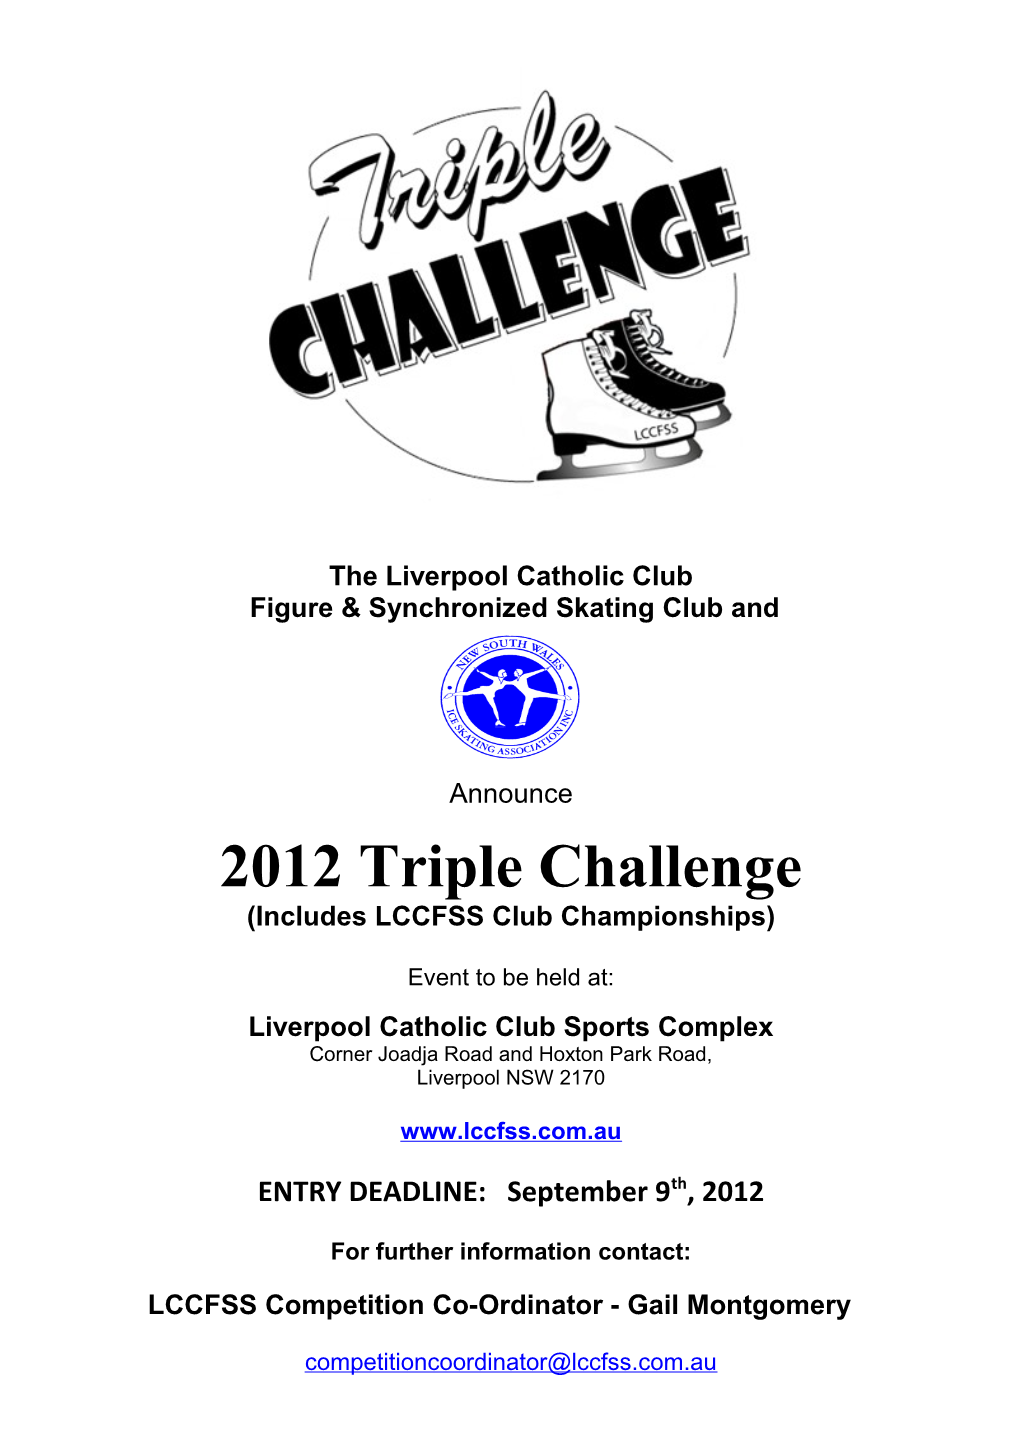 The Liverpool Catholic Club